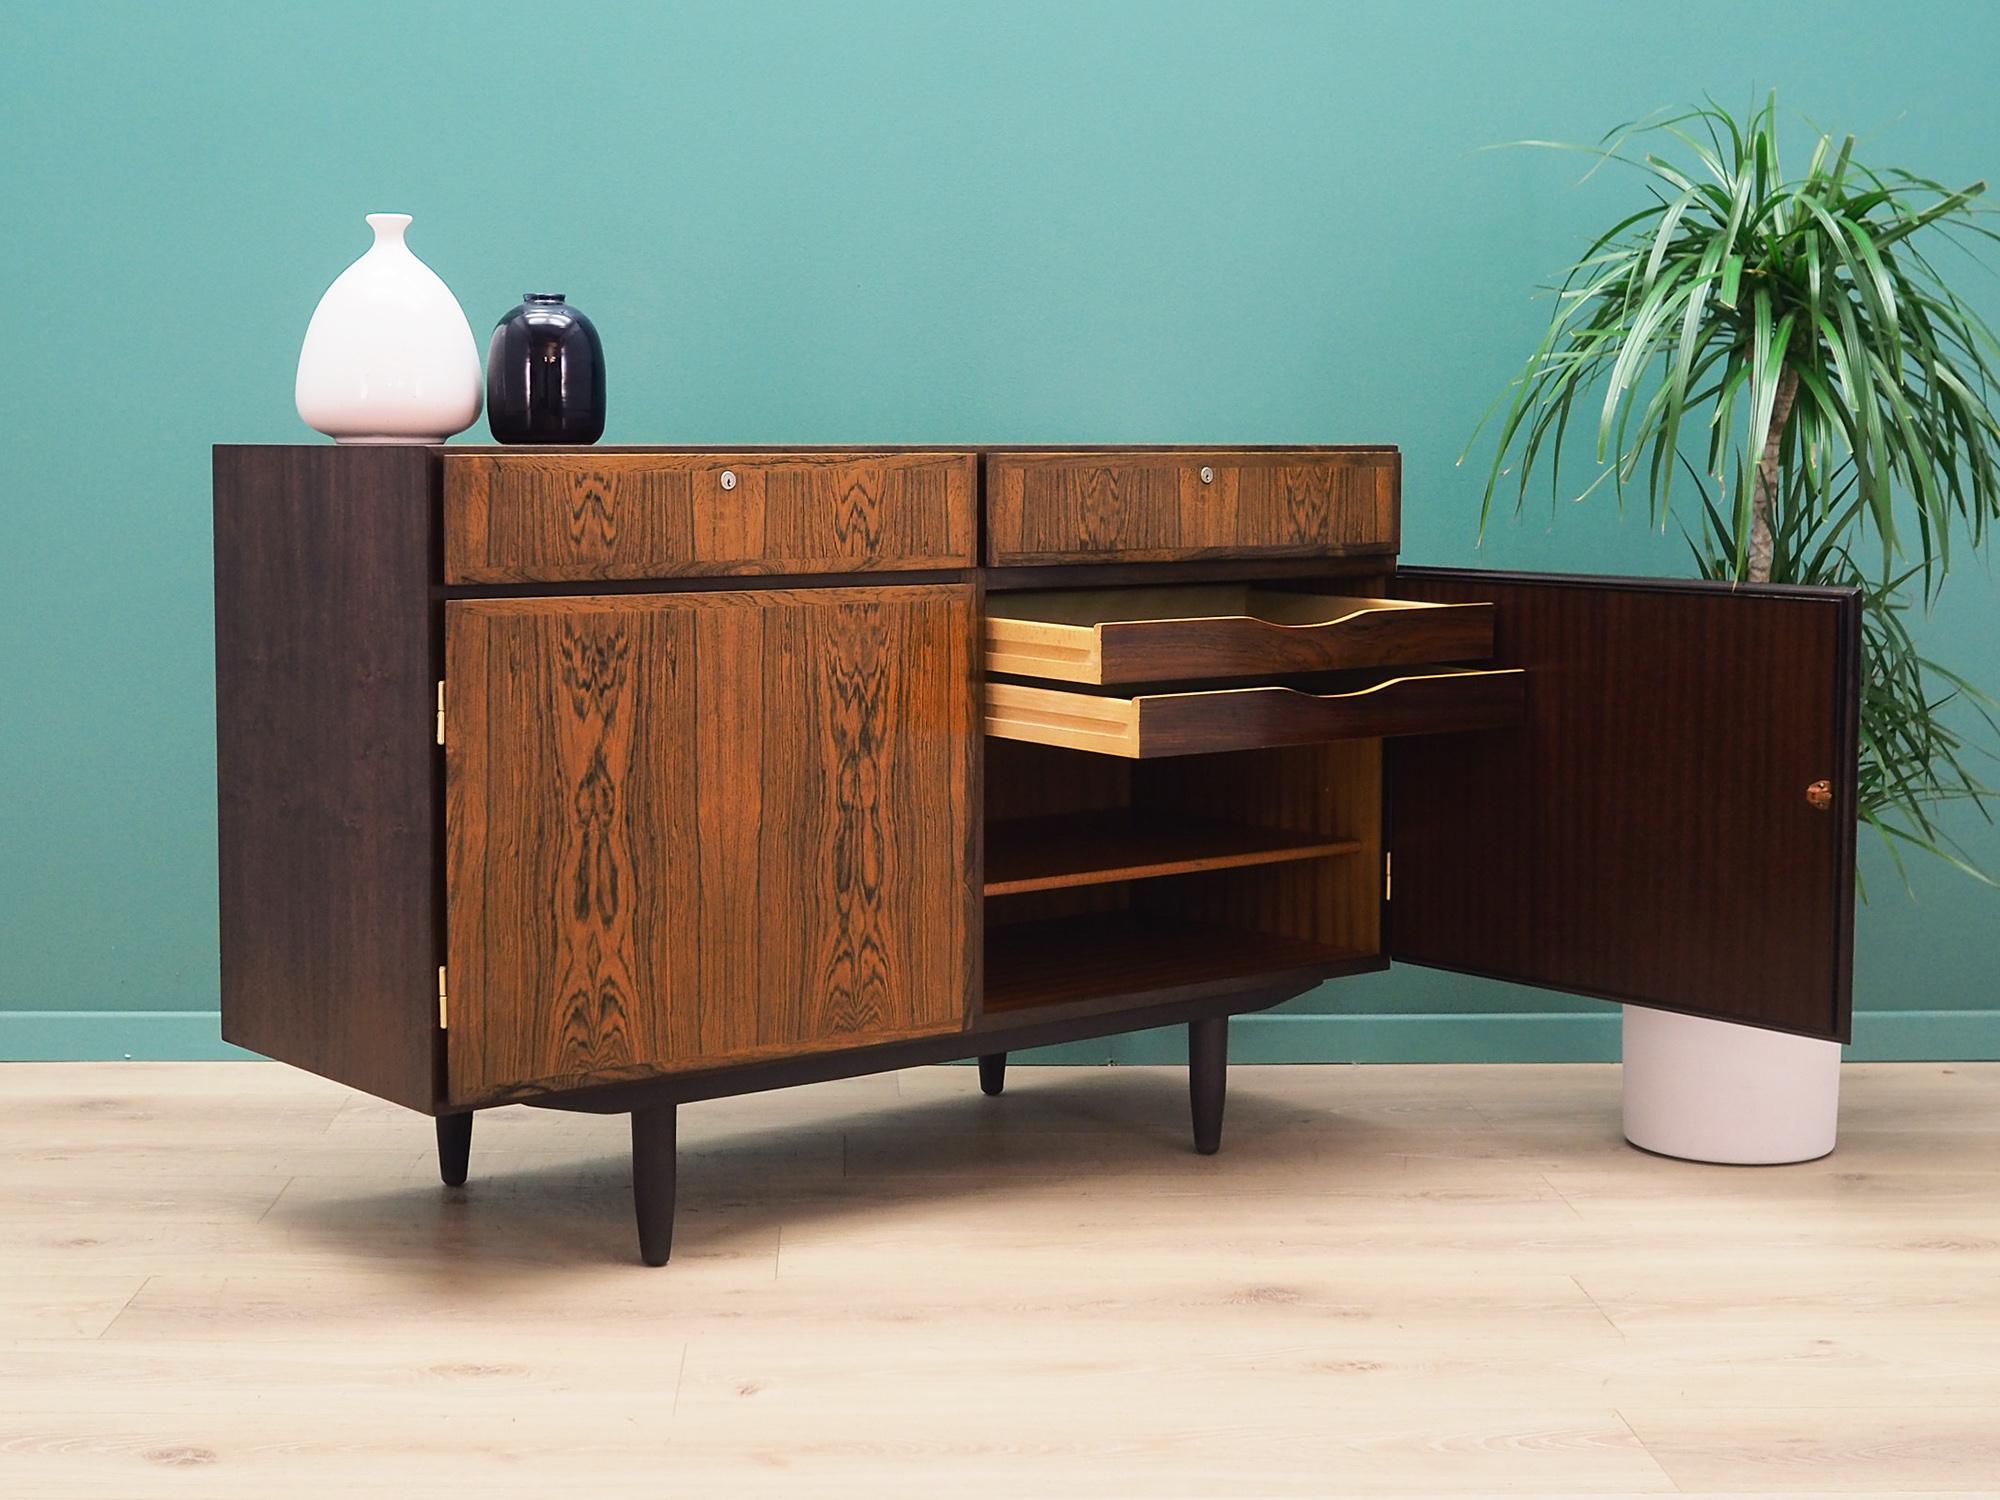 Veneer Rosewood Cabinet, Danish Design, 1960s, Producer Omann Jun